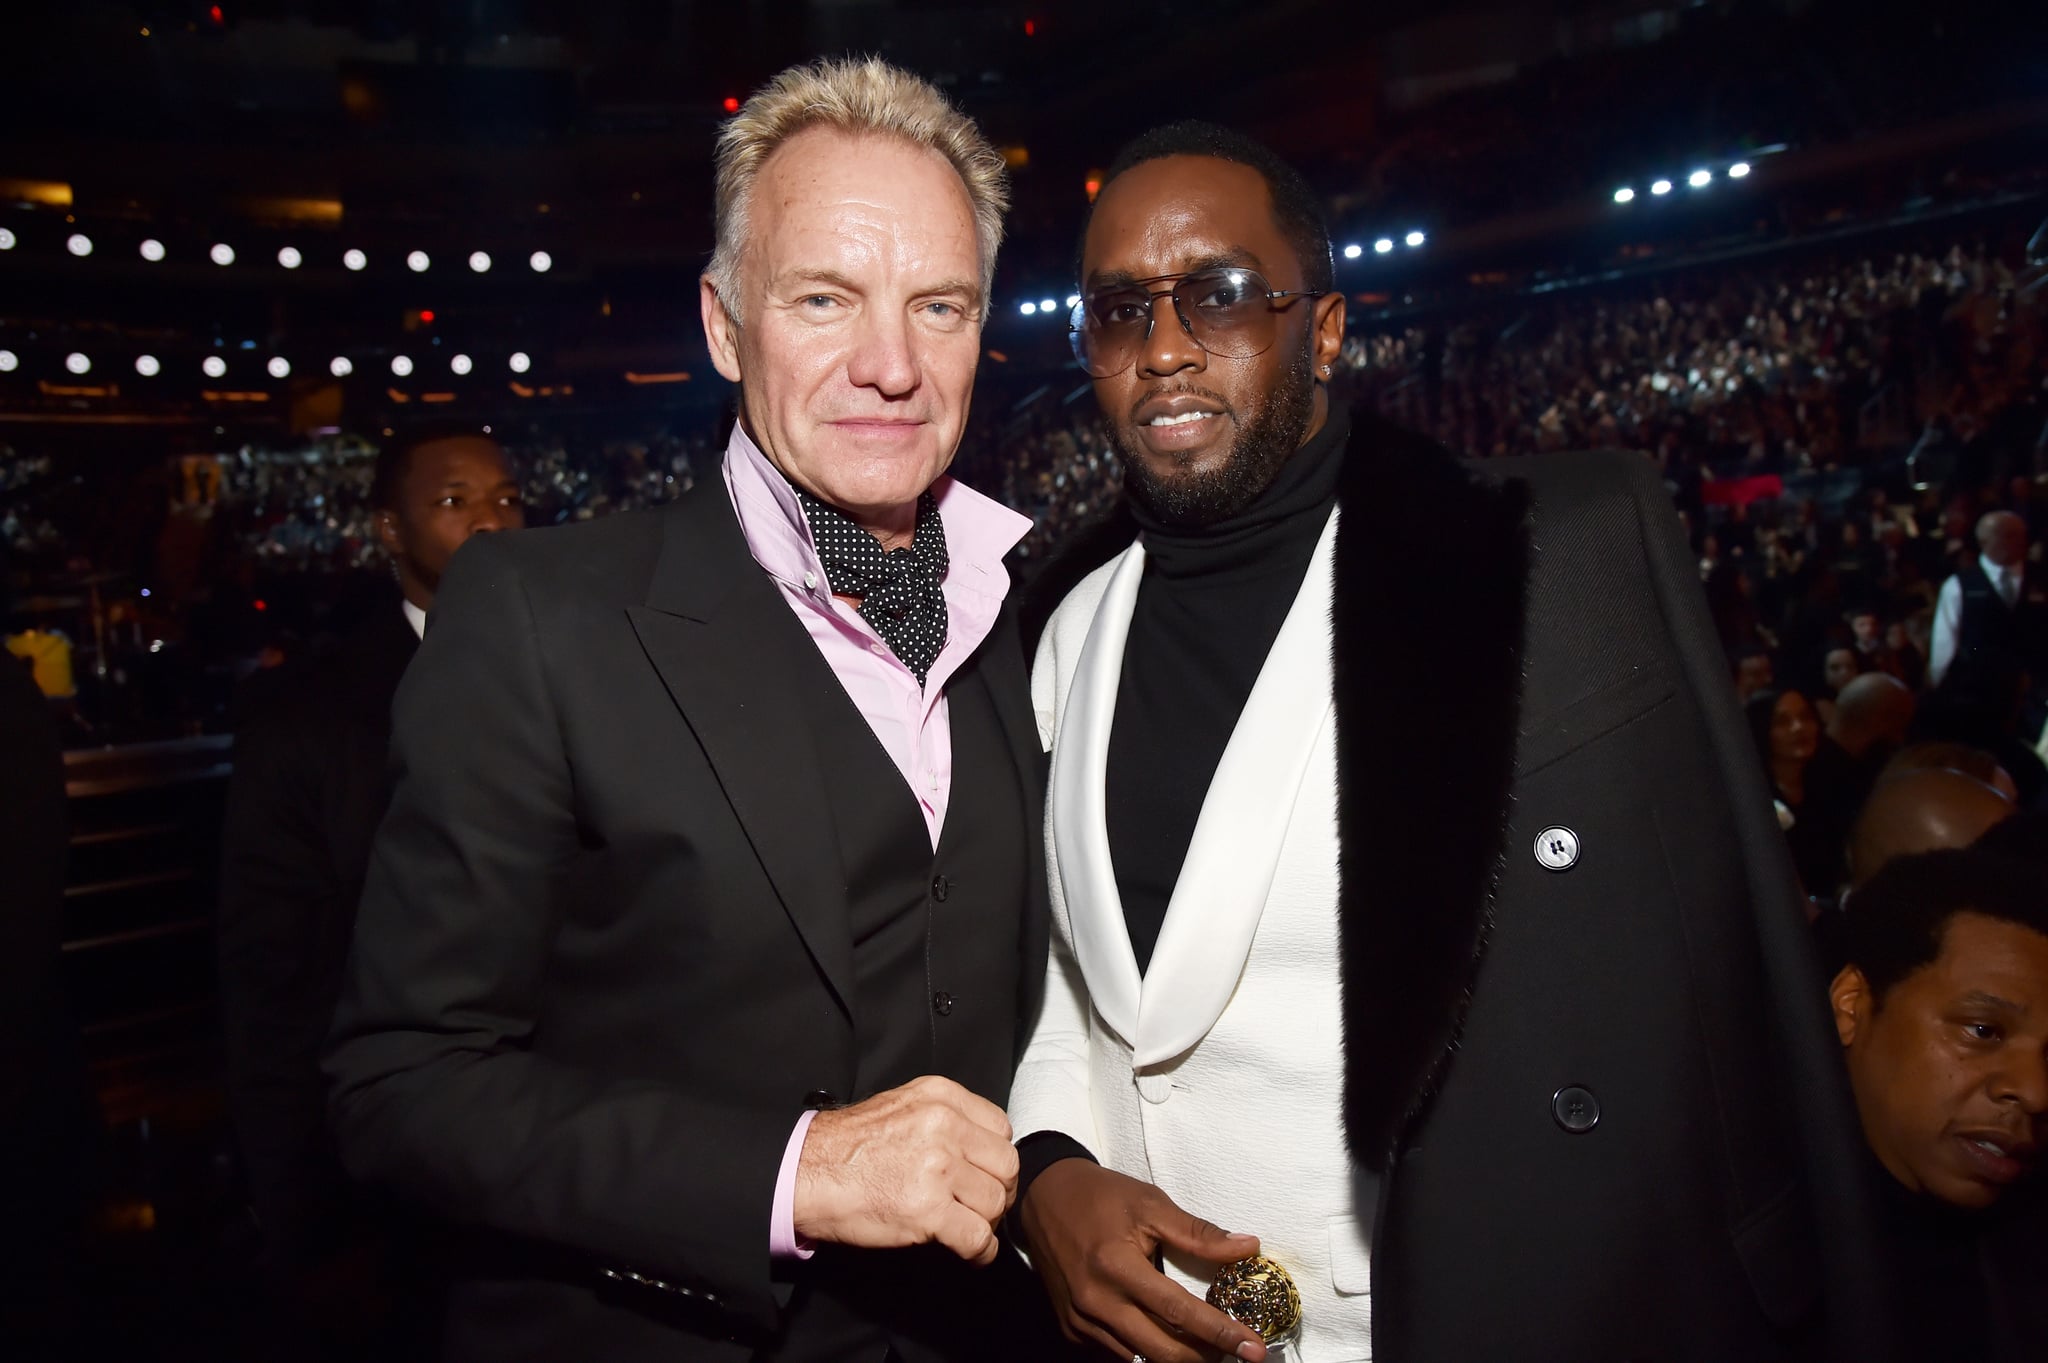 NEW YORK, NY - JANUARY 28: Recording artists Sting and Sean 